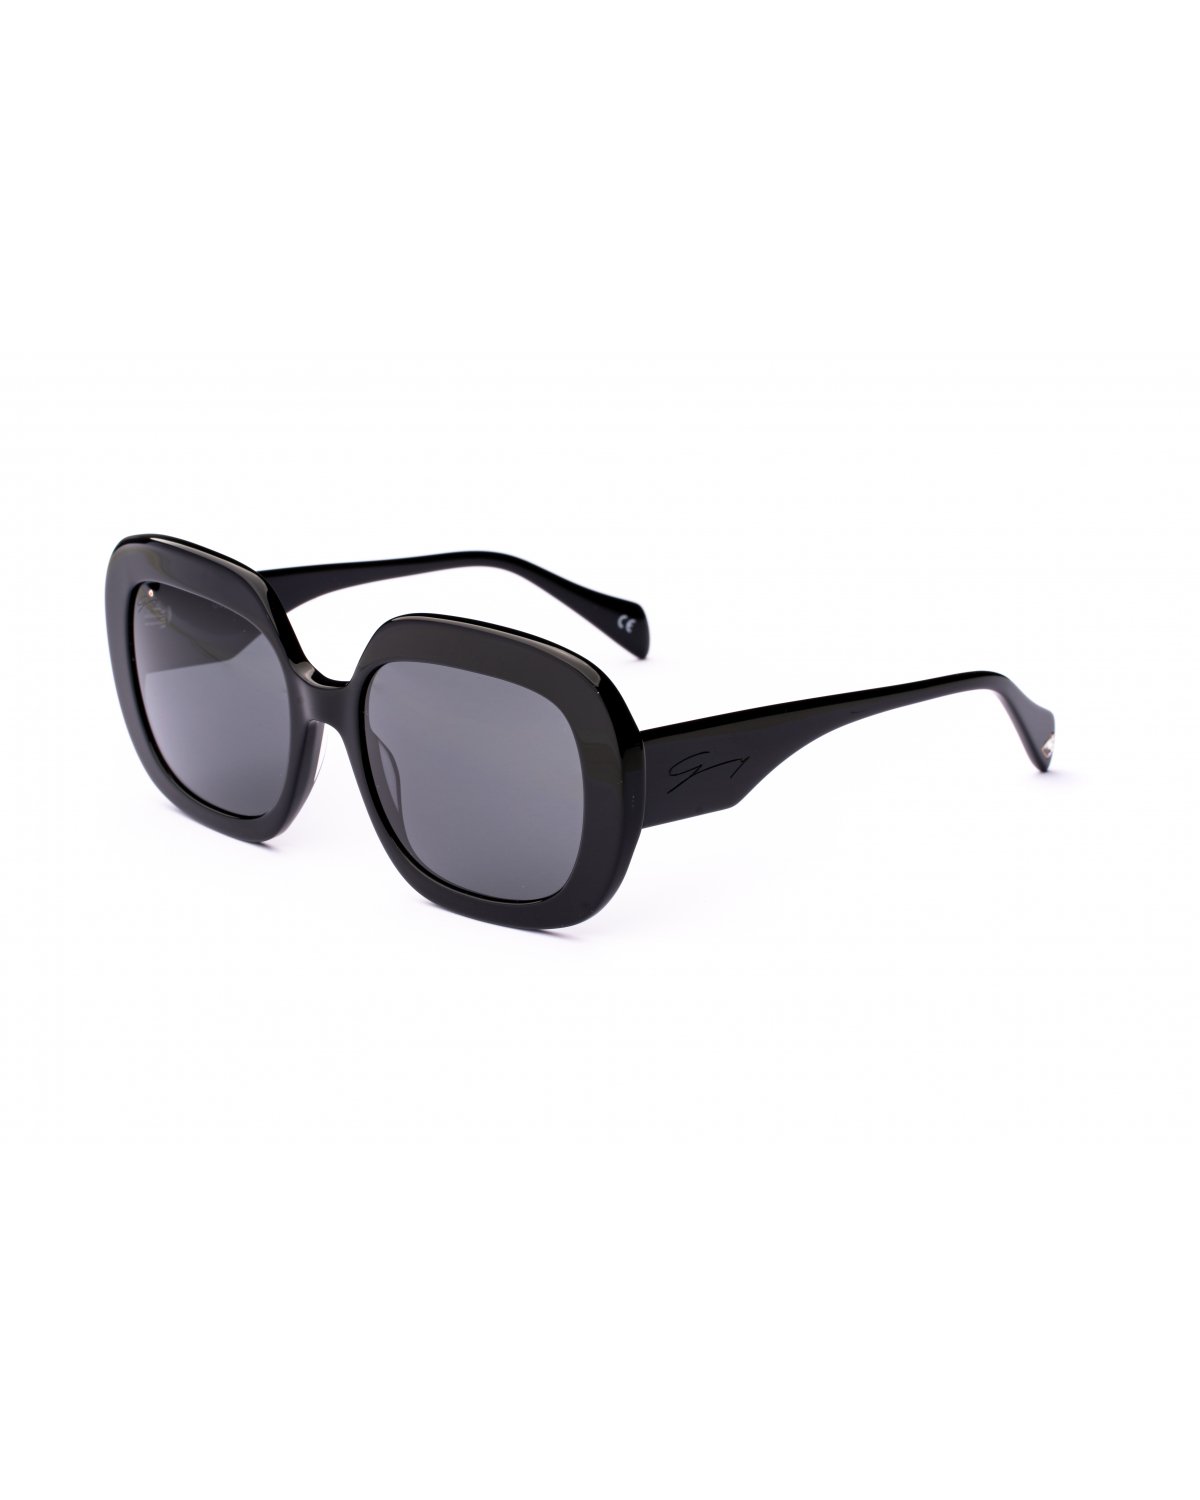  Tortoiseshell acetate sunglasses | Accessories | Genny